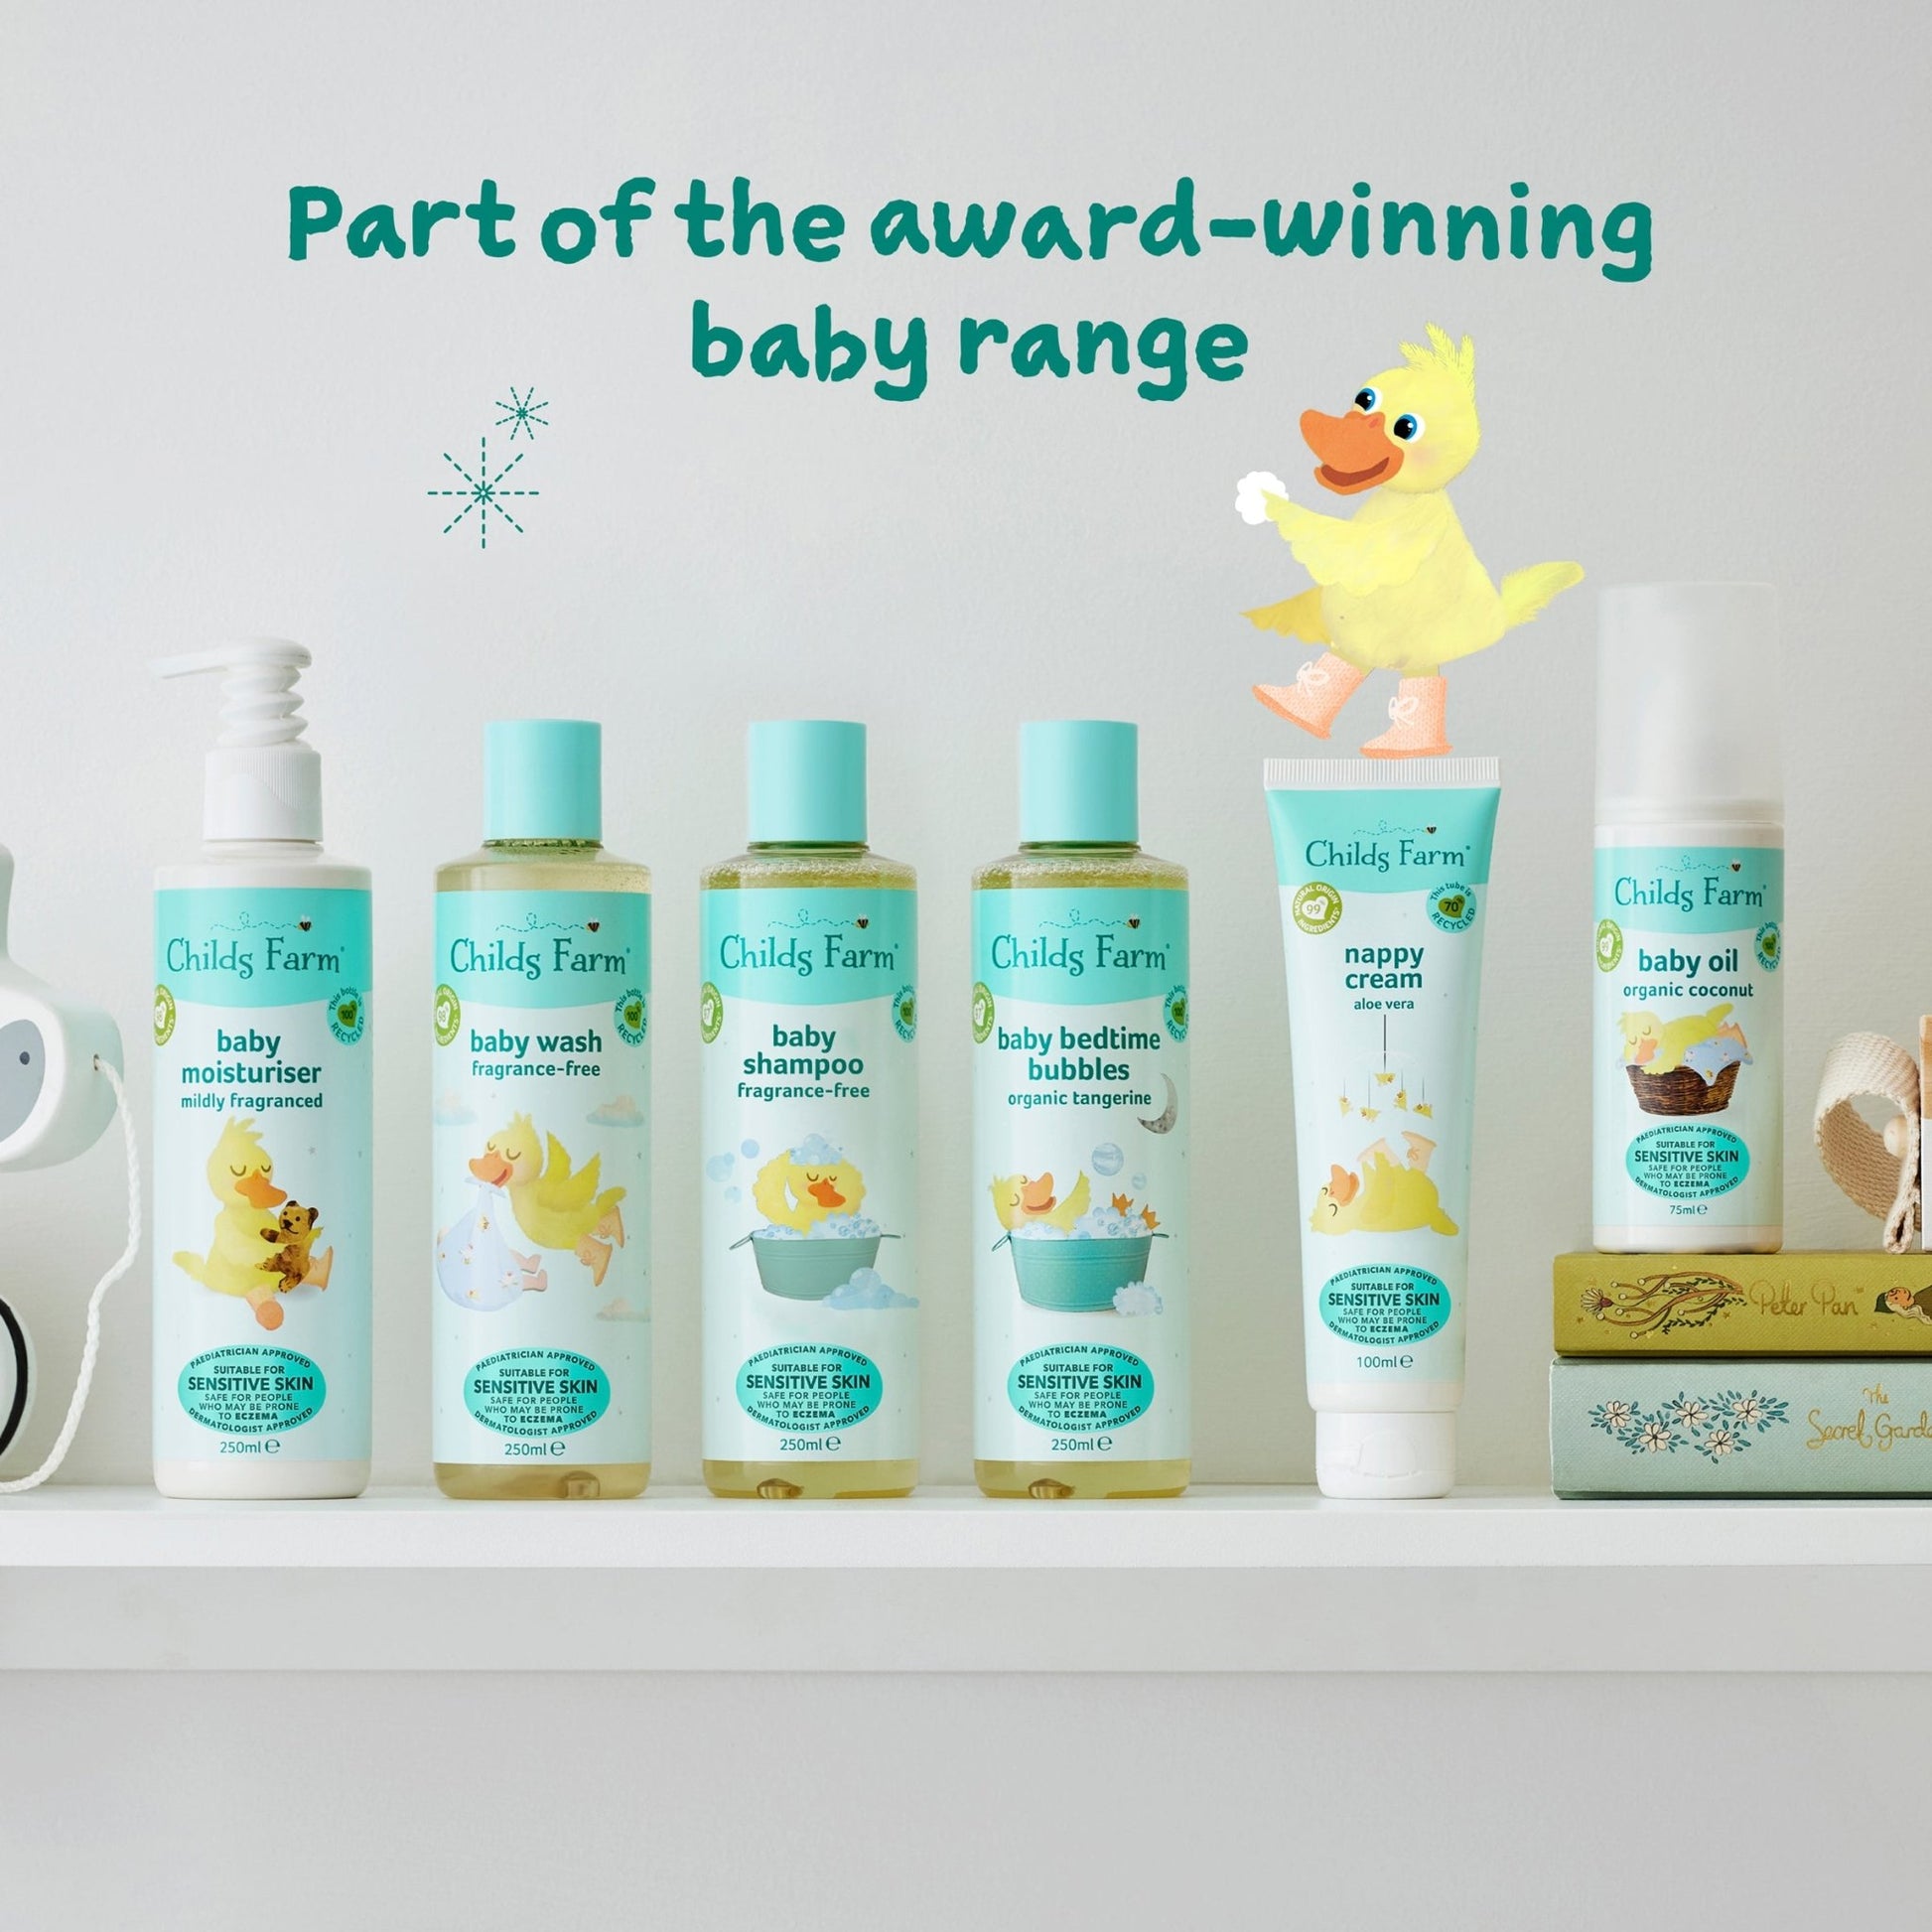 [STAFF] baby shampoo fragrance-free